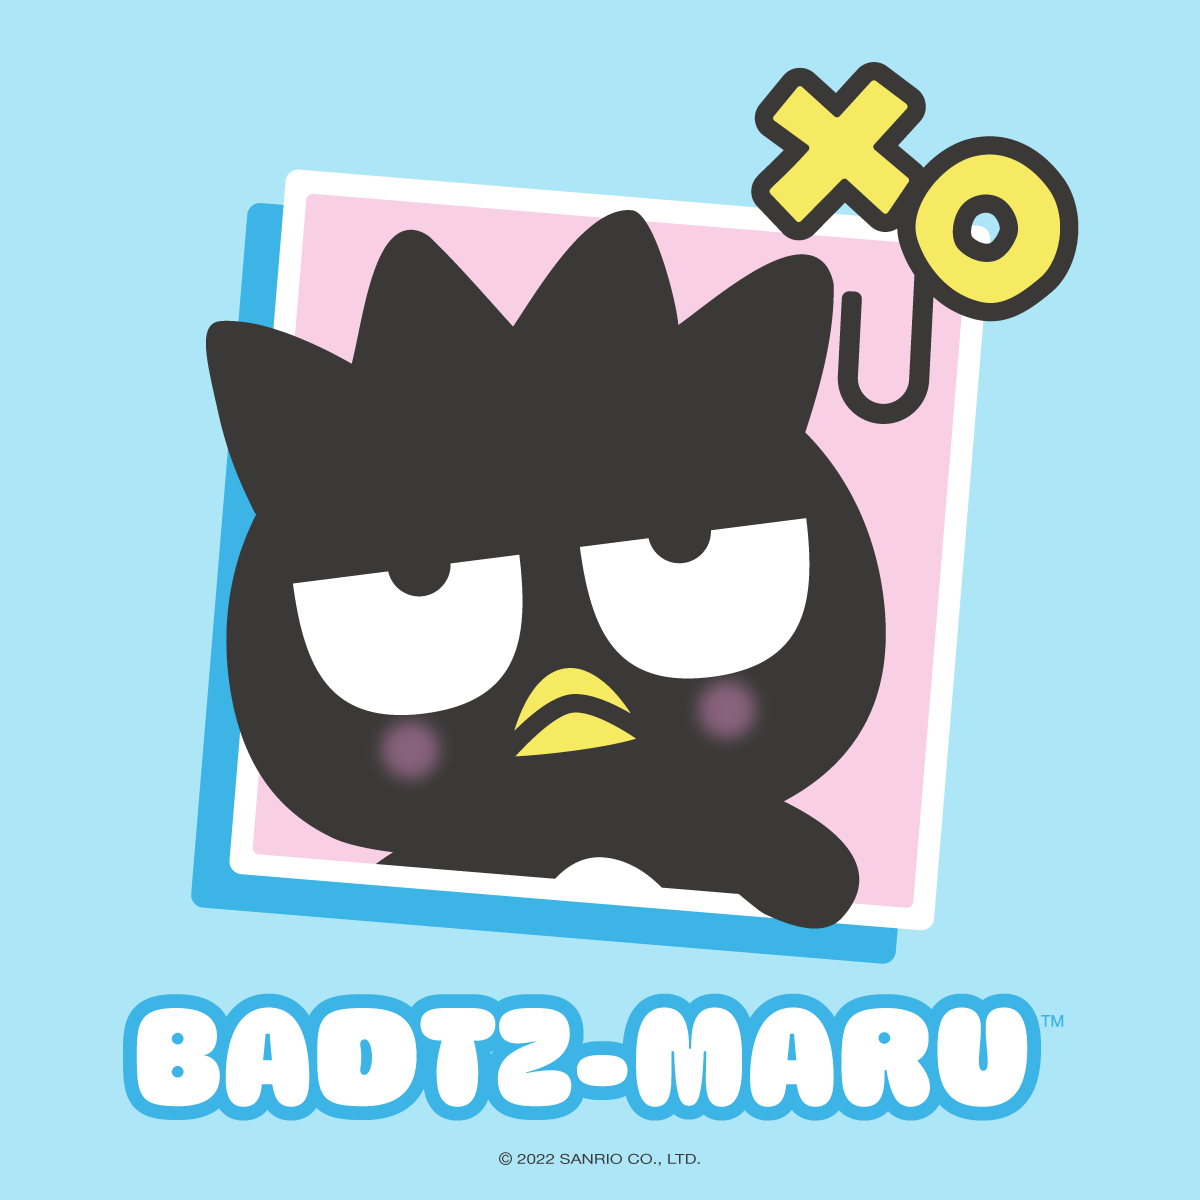 Sanrio Friend of the Month: Badtz-maru